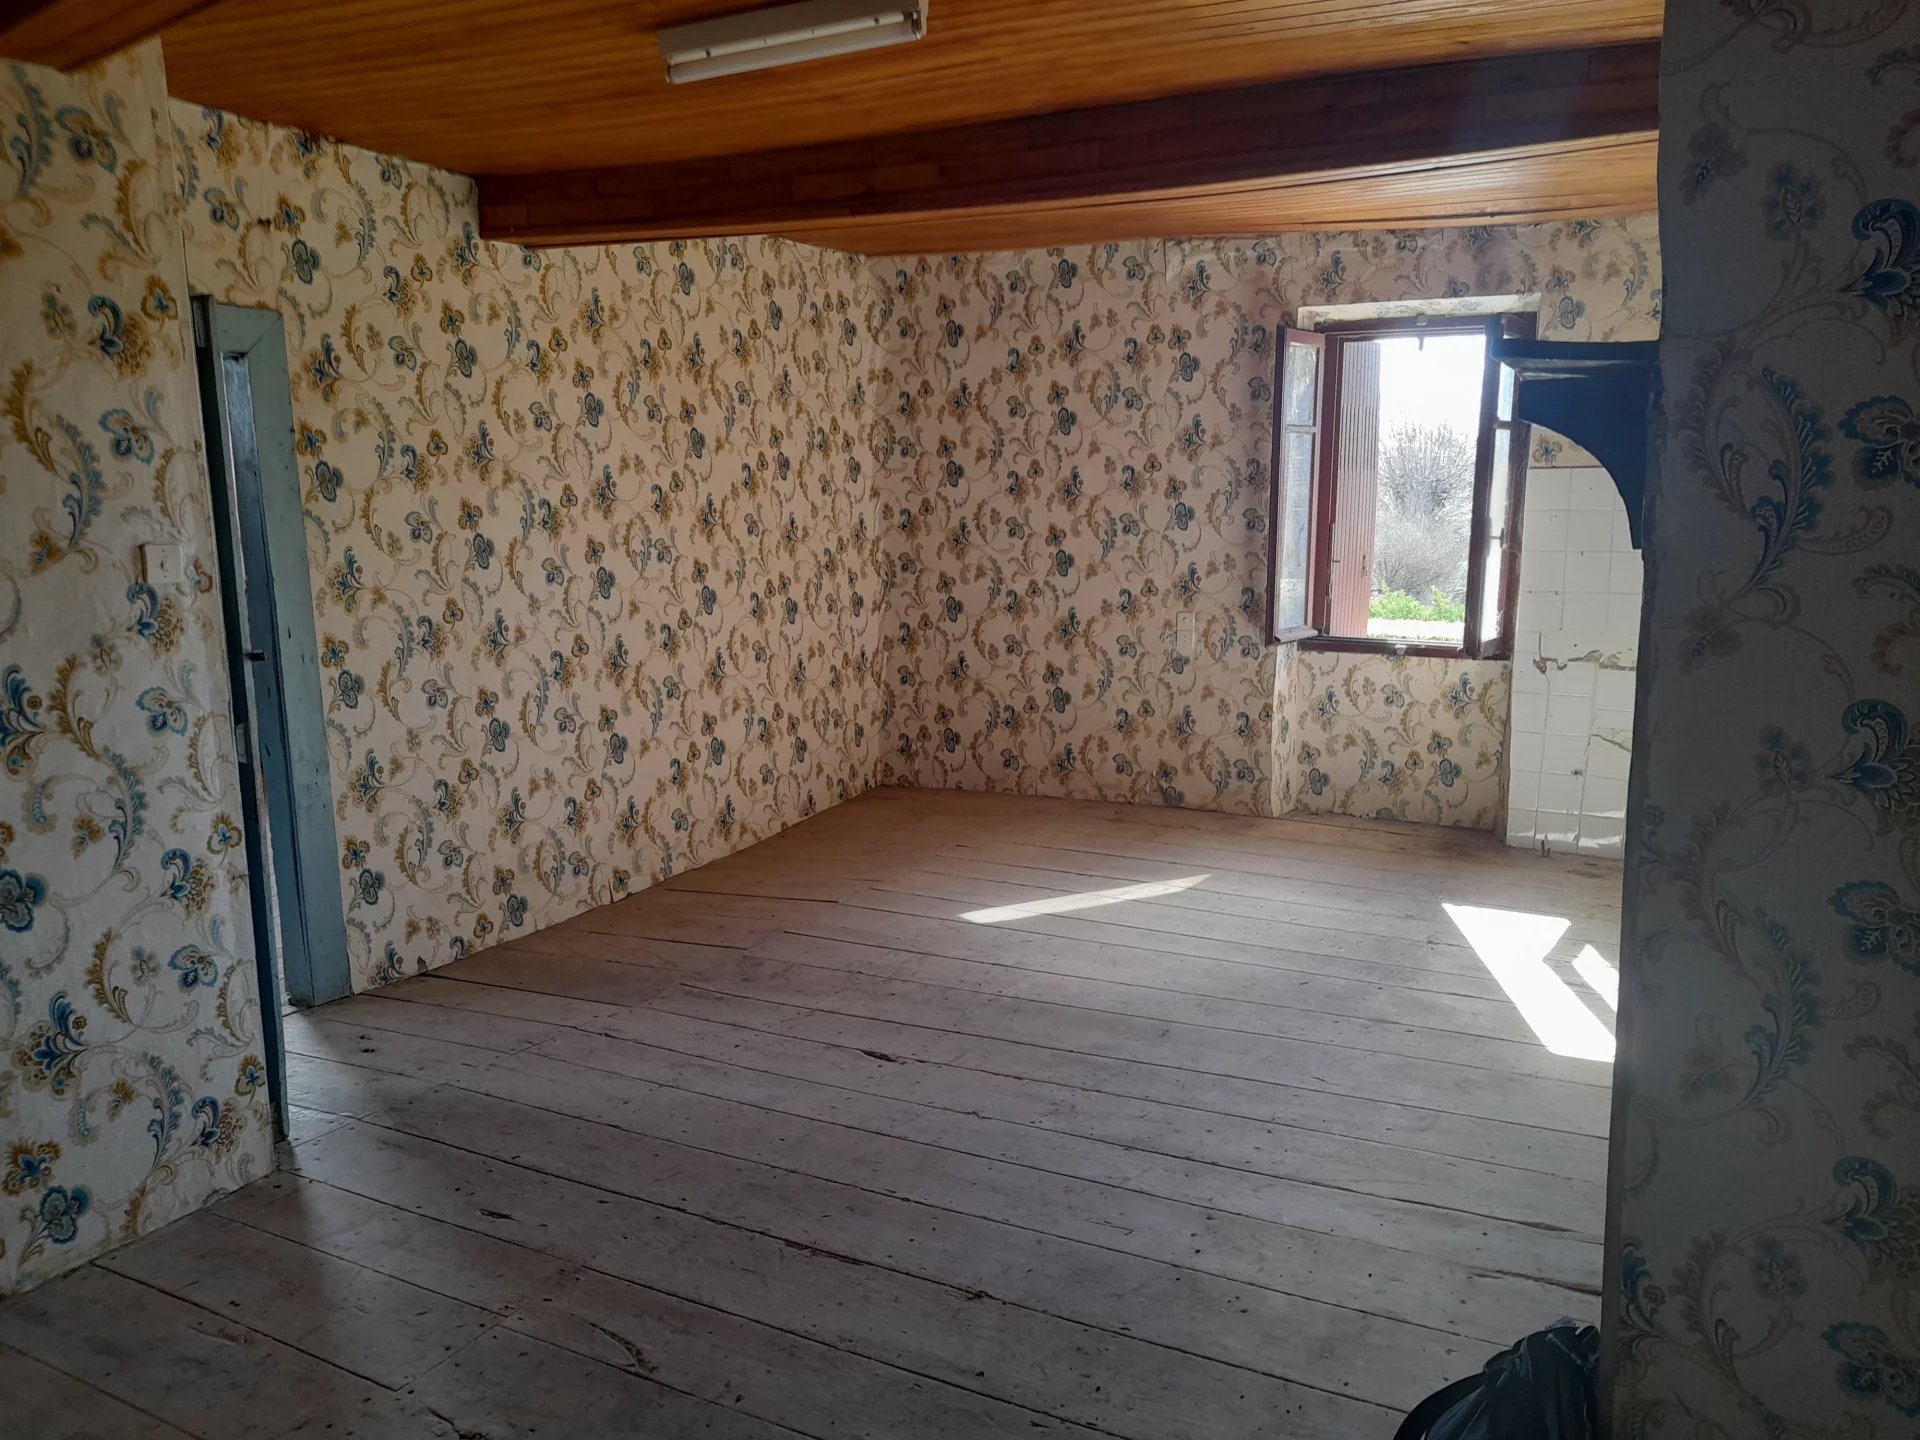 SAMAN, 67 m² village house to finish renovating